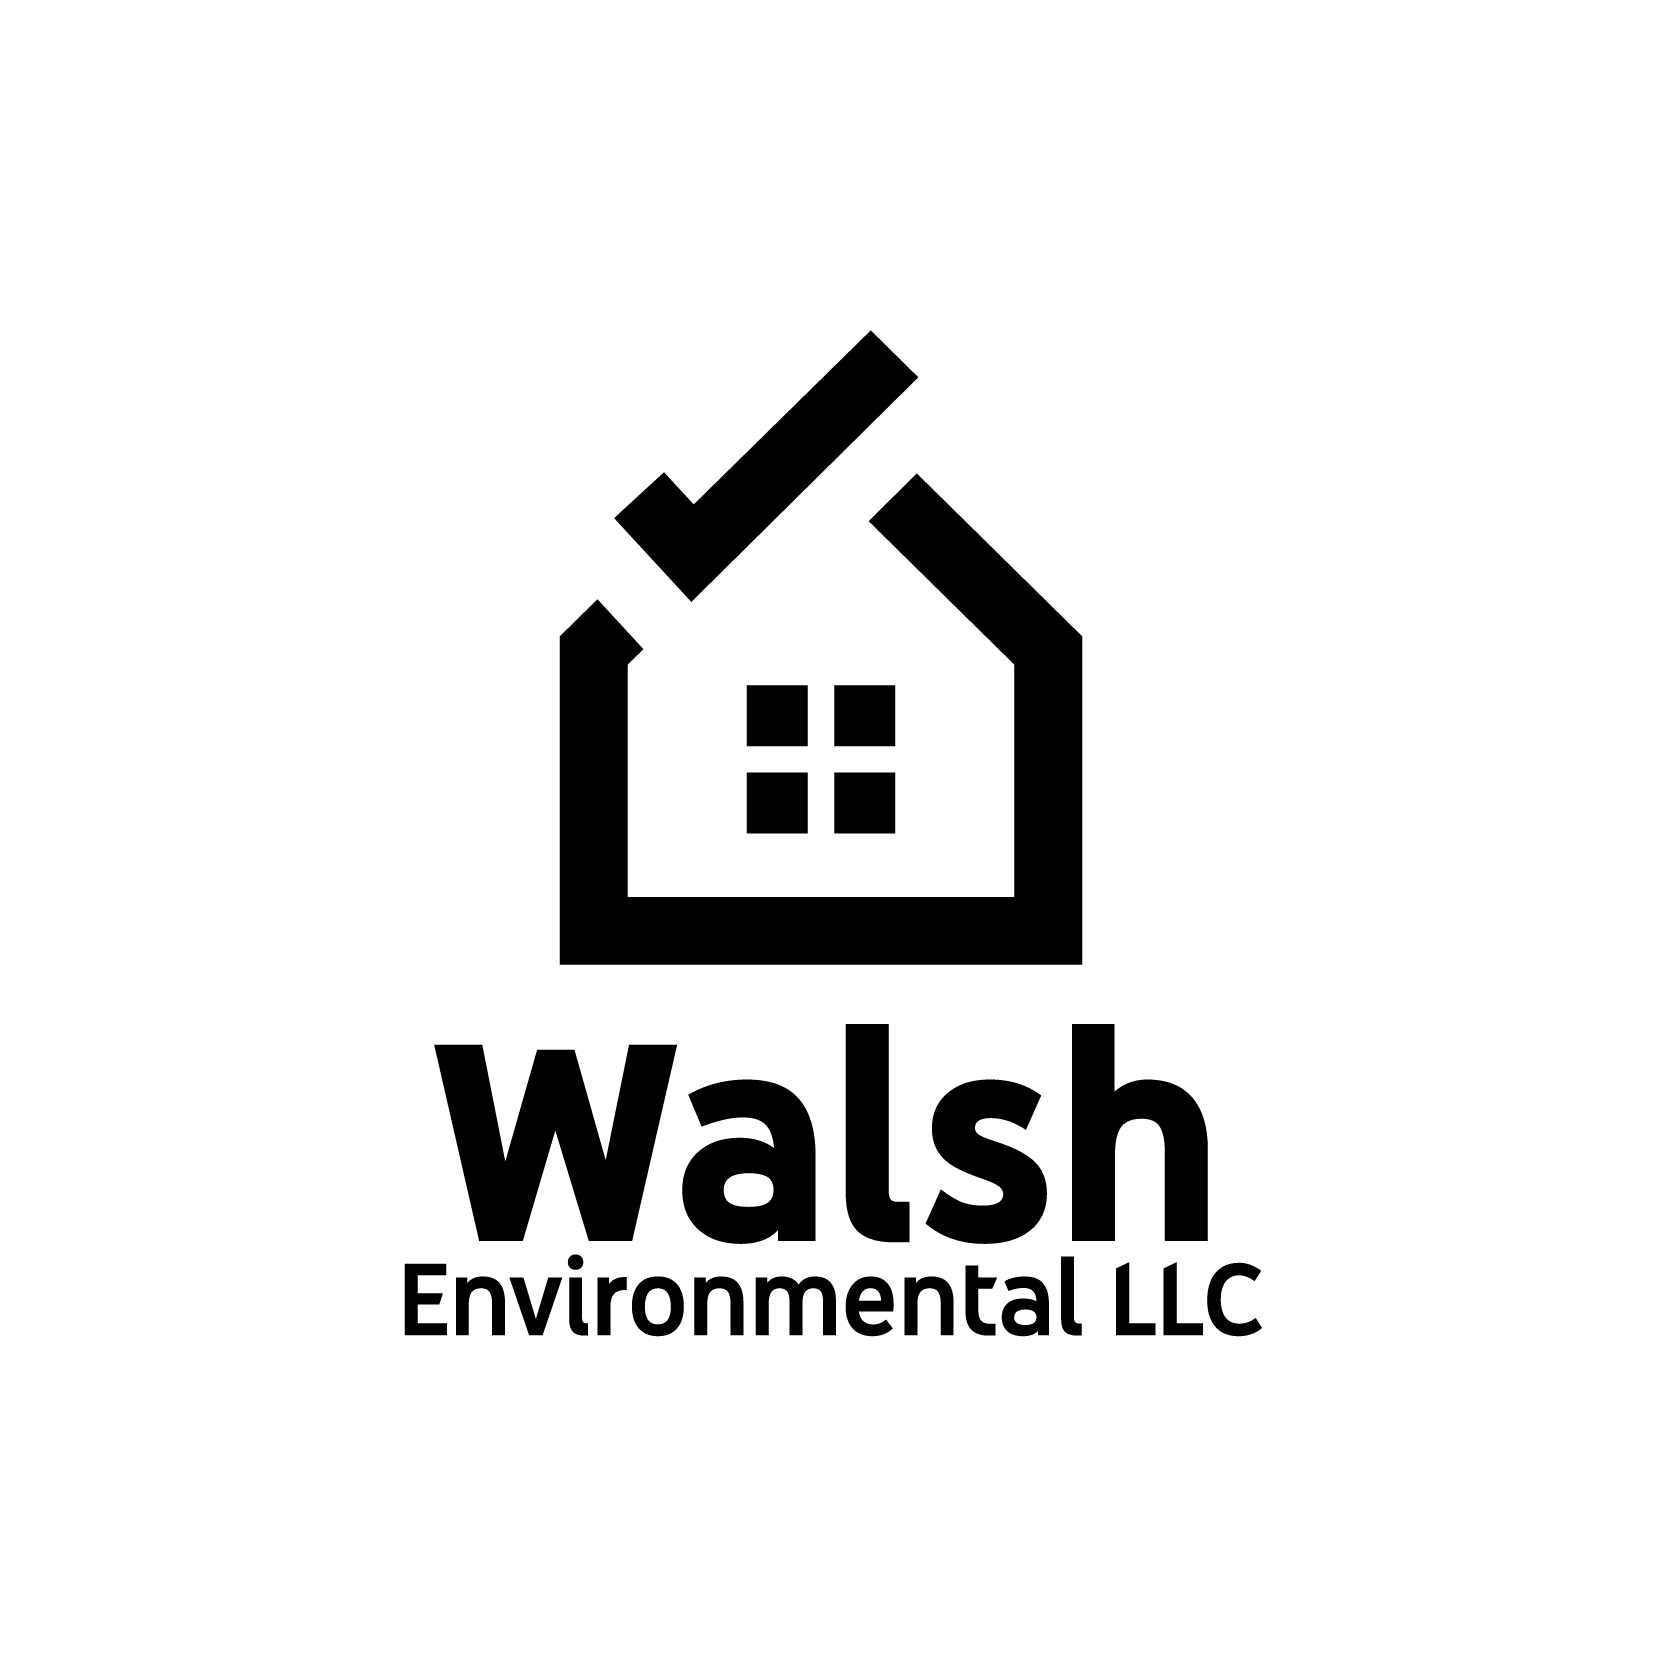 Walsh Environmental LLC Logo